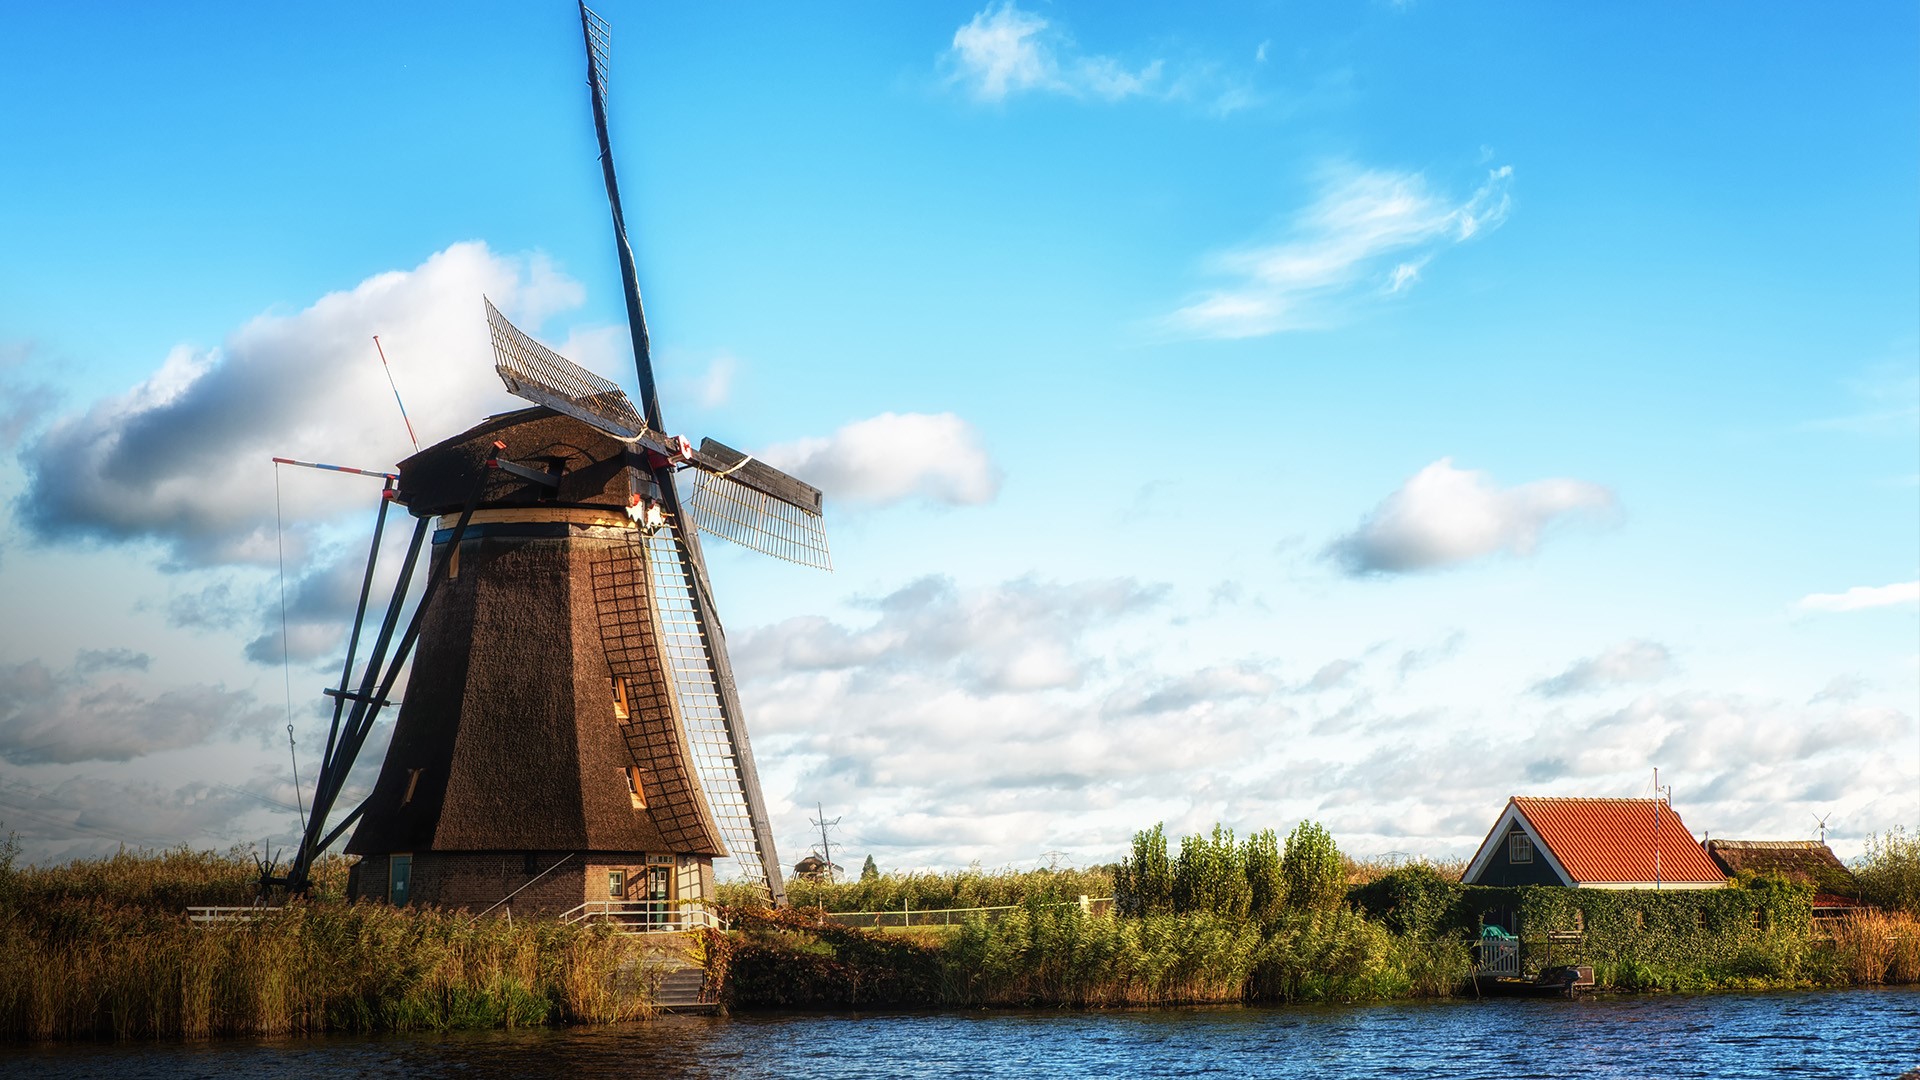 General 1920x1080 grass nature landscape clouds sky house village plants Dutch windmill Netherlands